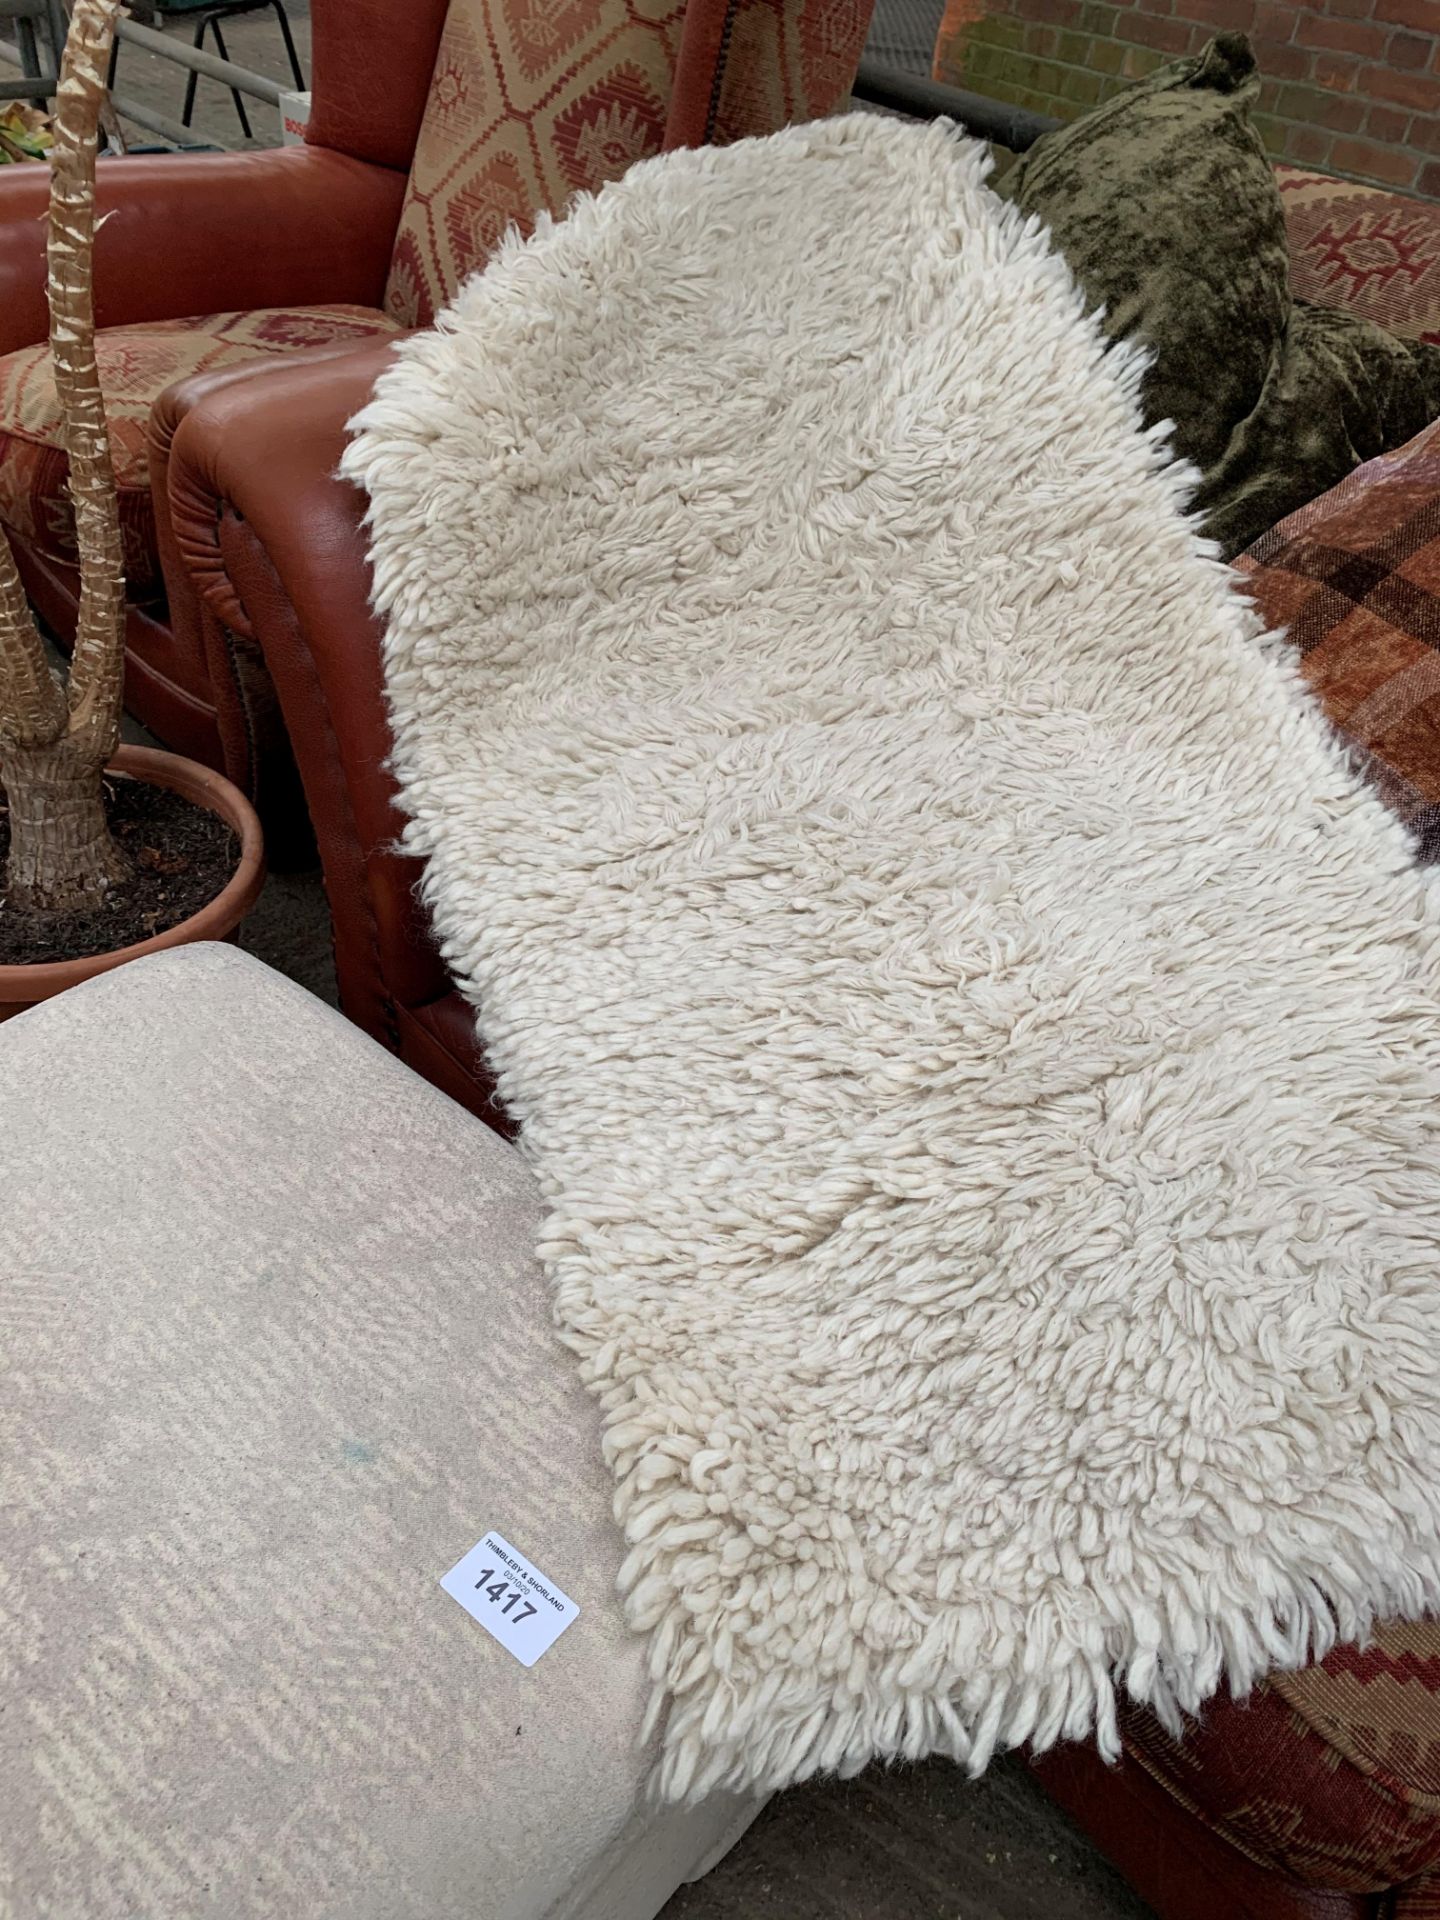 Shag pile rug and a cream upholstered ottoman